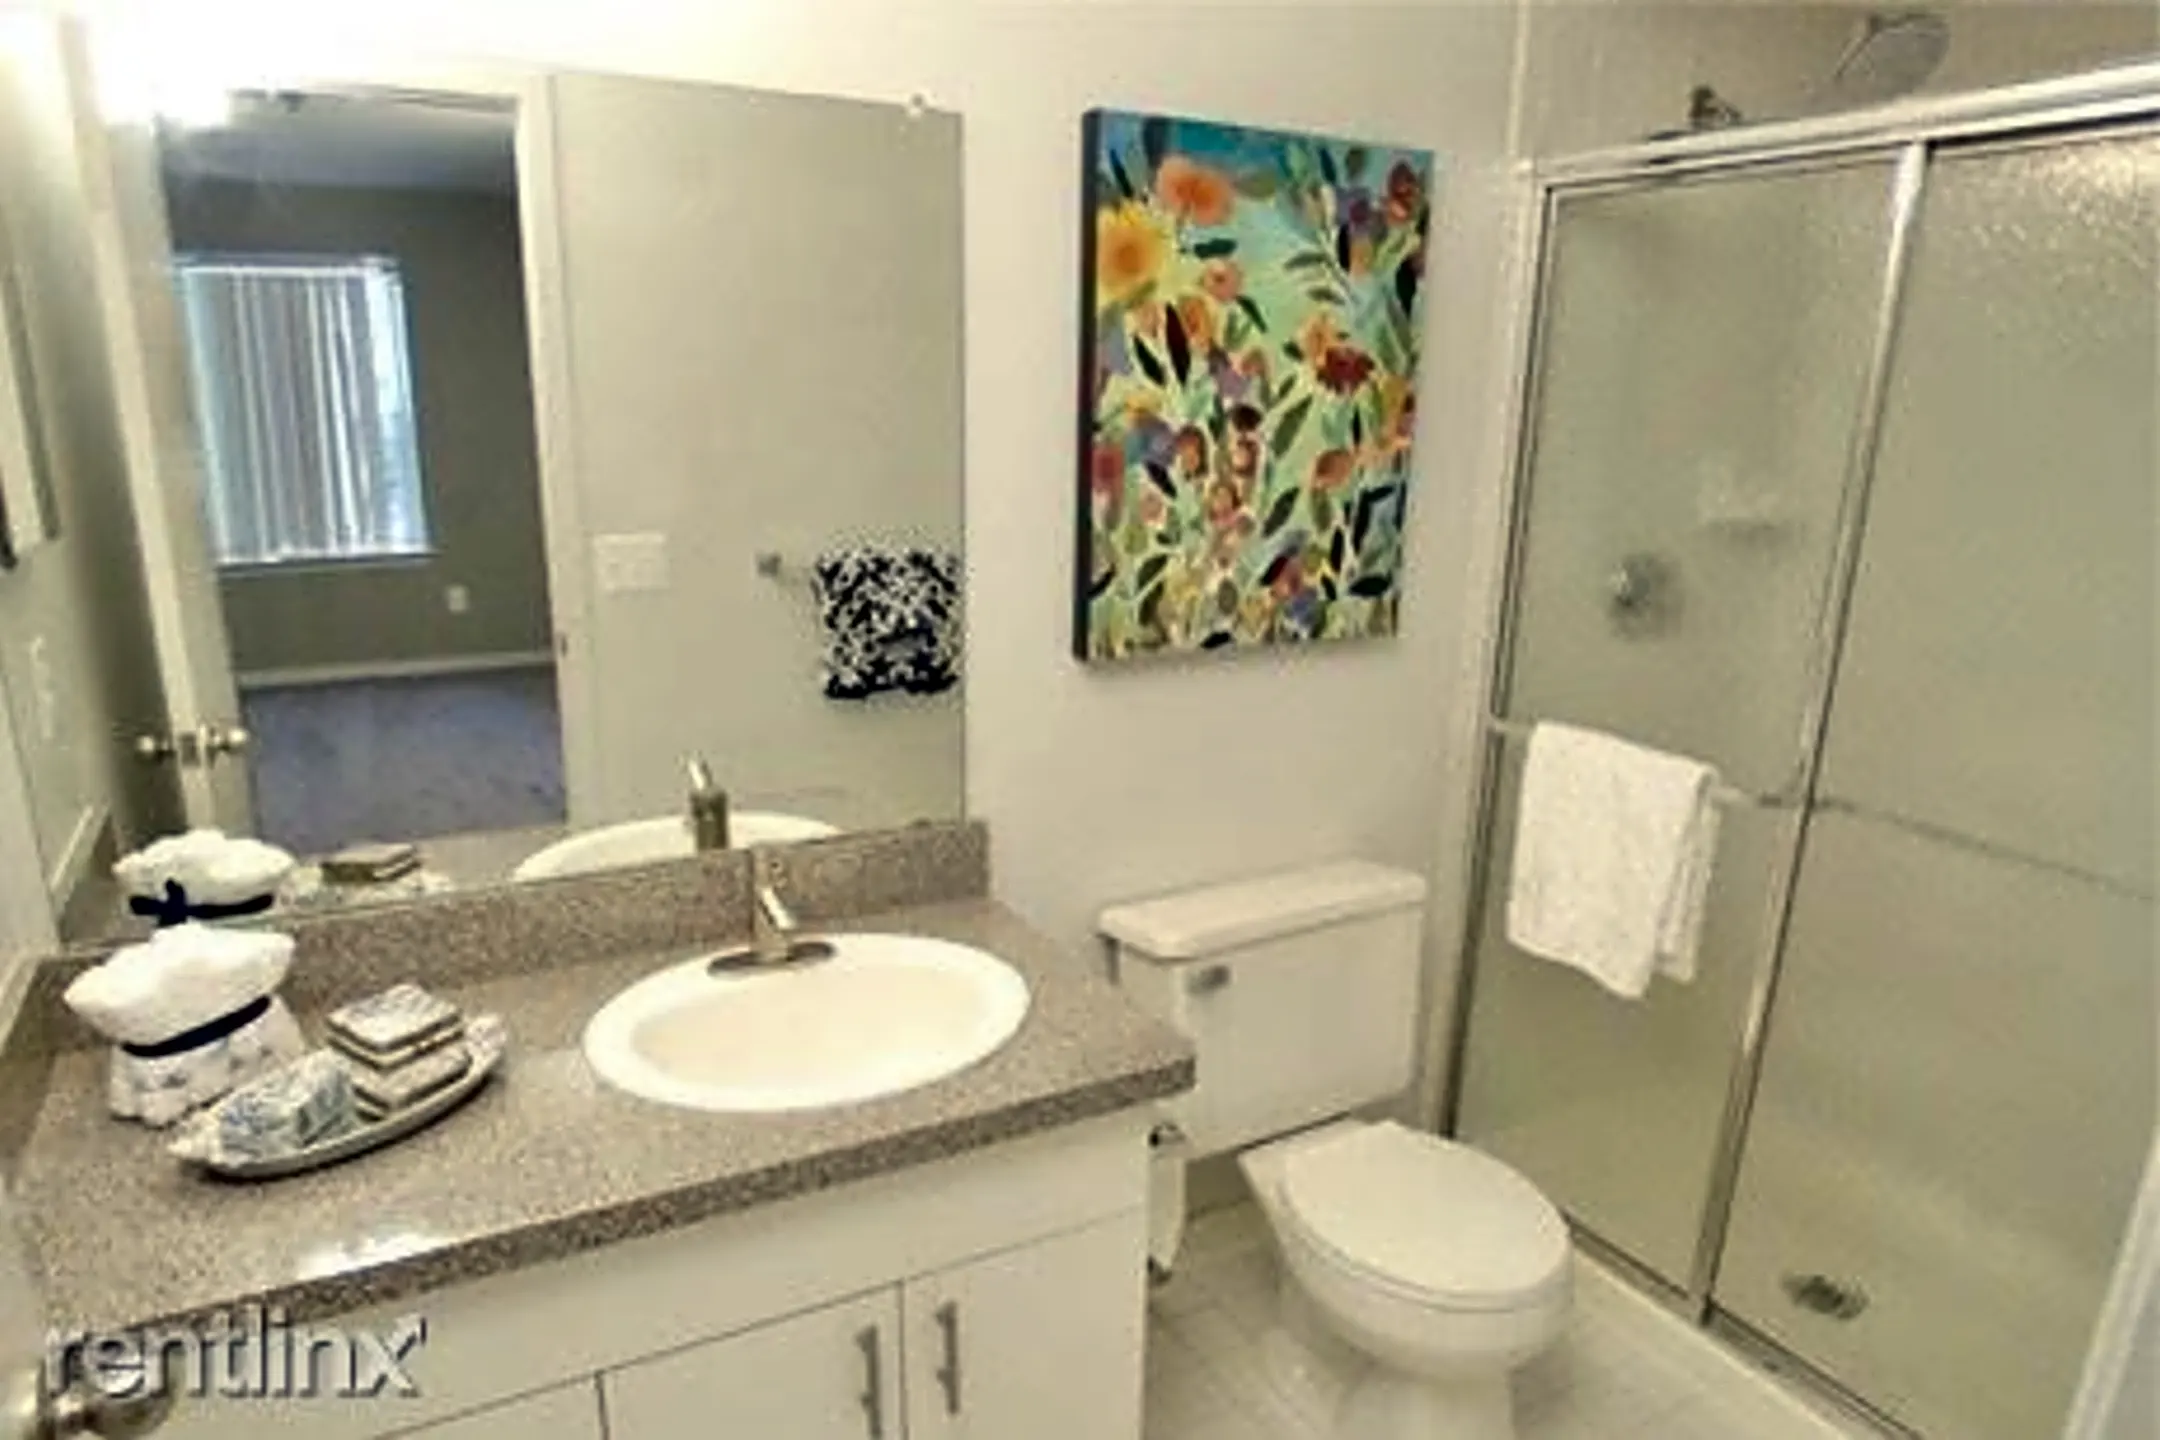 Bathroom - Foxpointe Townhouses - Farmington Hills, MI